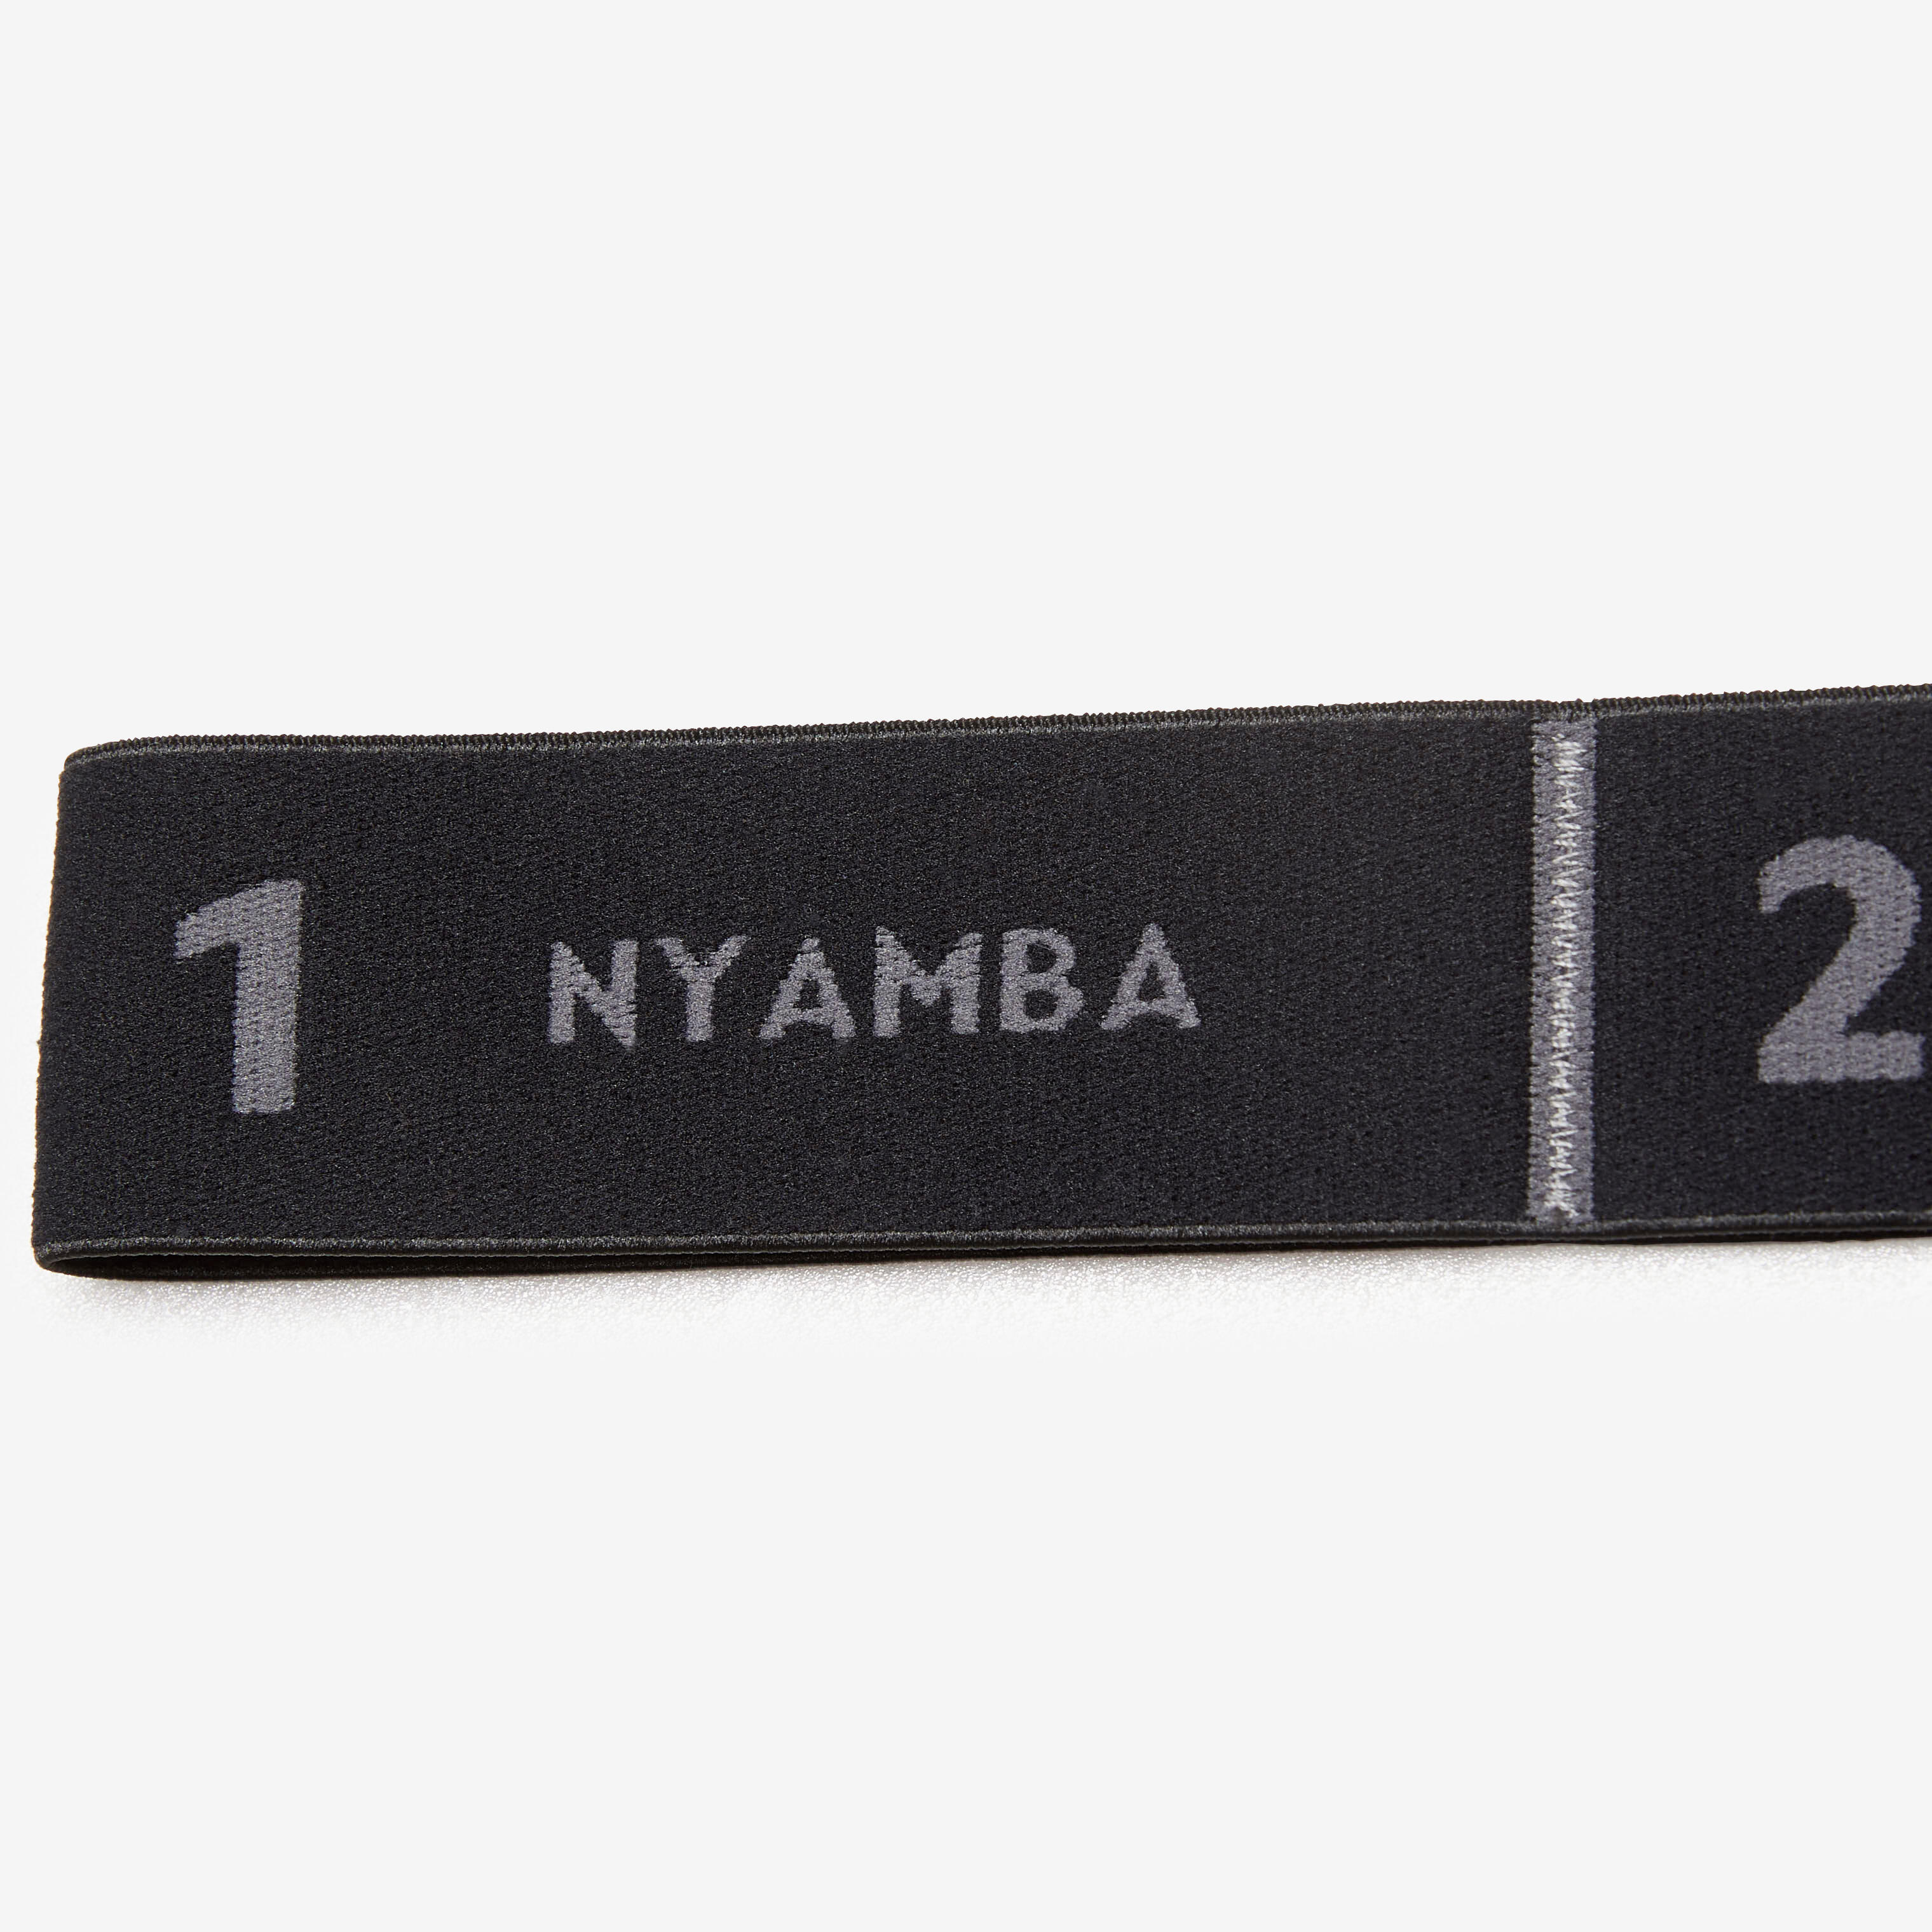 Domyos Nyamba Pilates Rubber Resistance Band - Medium 6 lbs / 3 kg :  : Sporting Goods